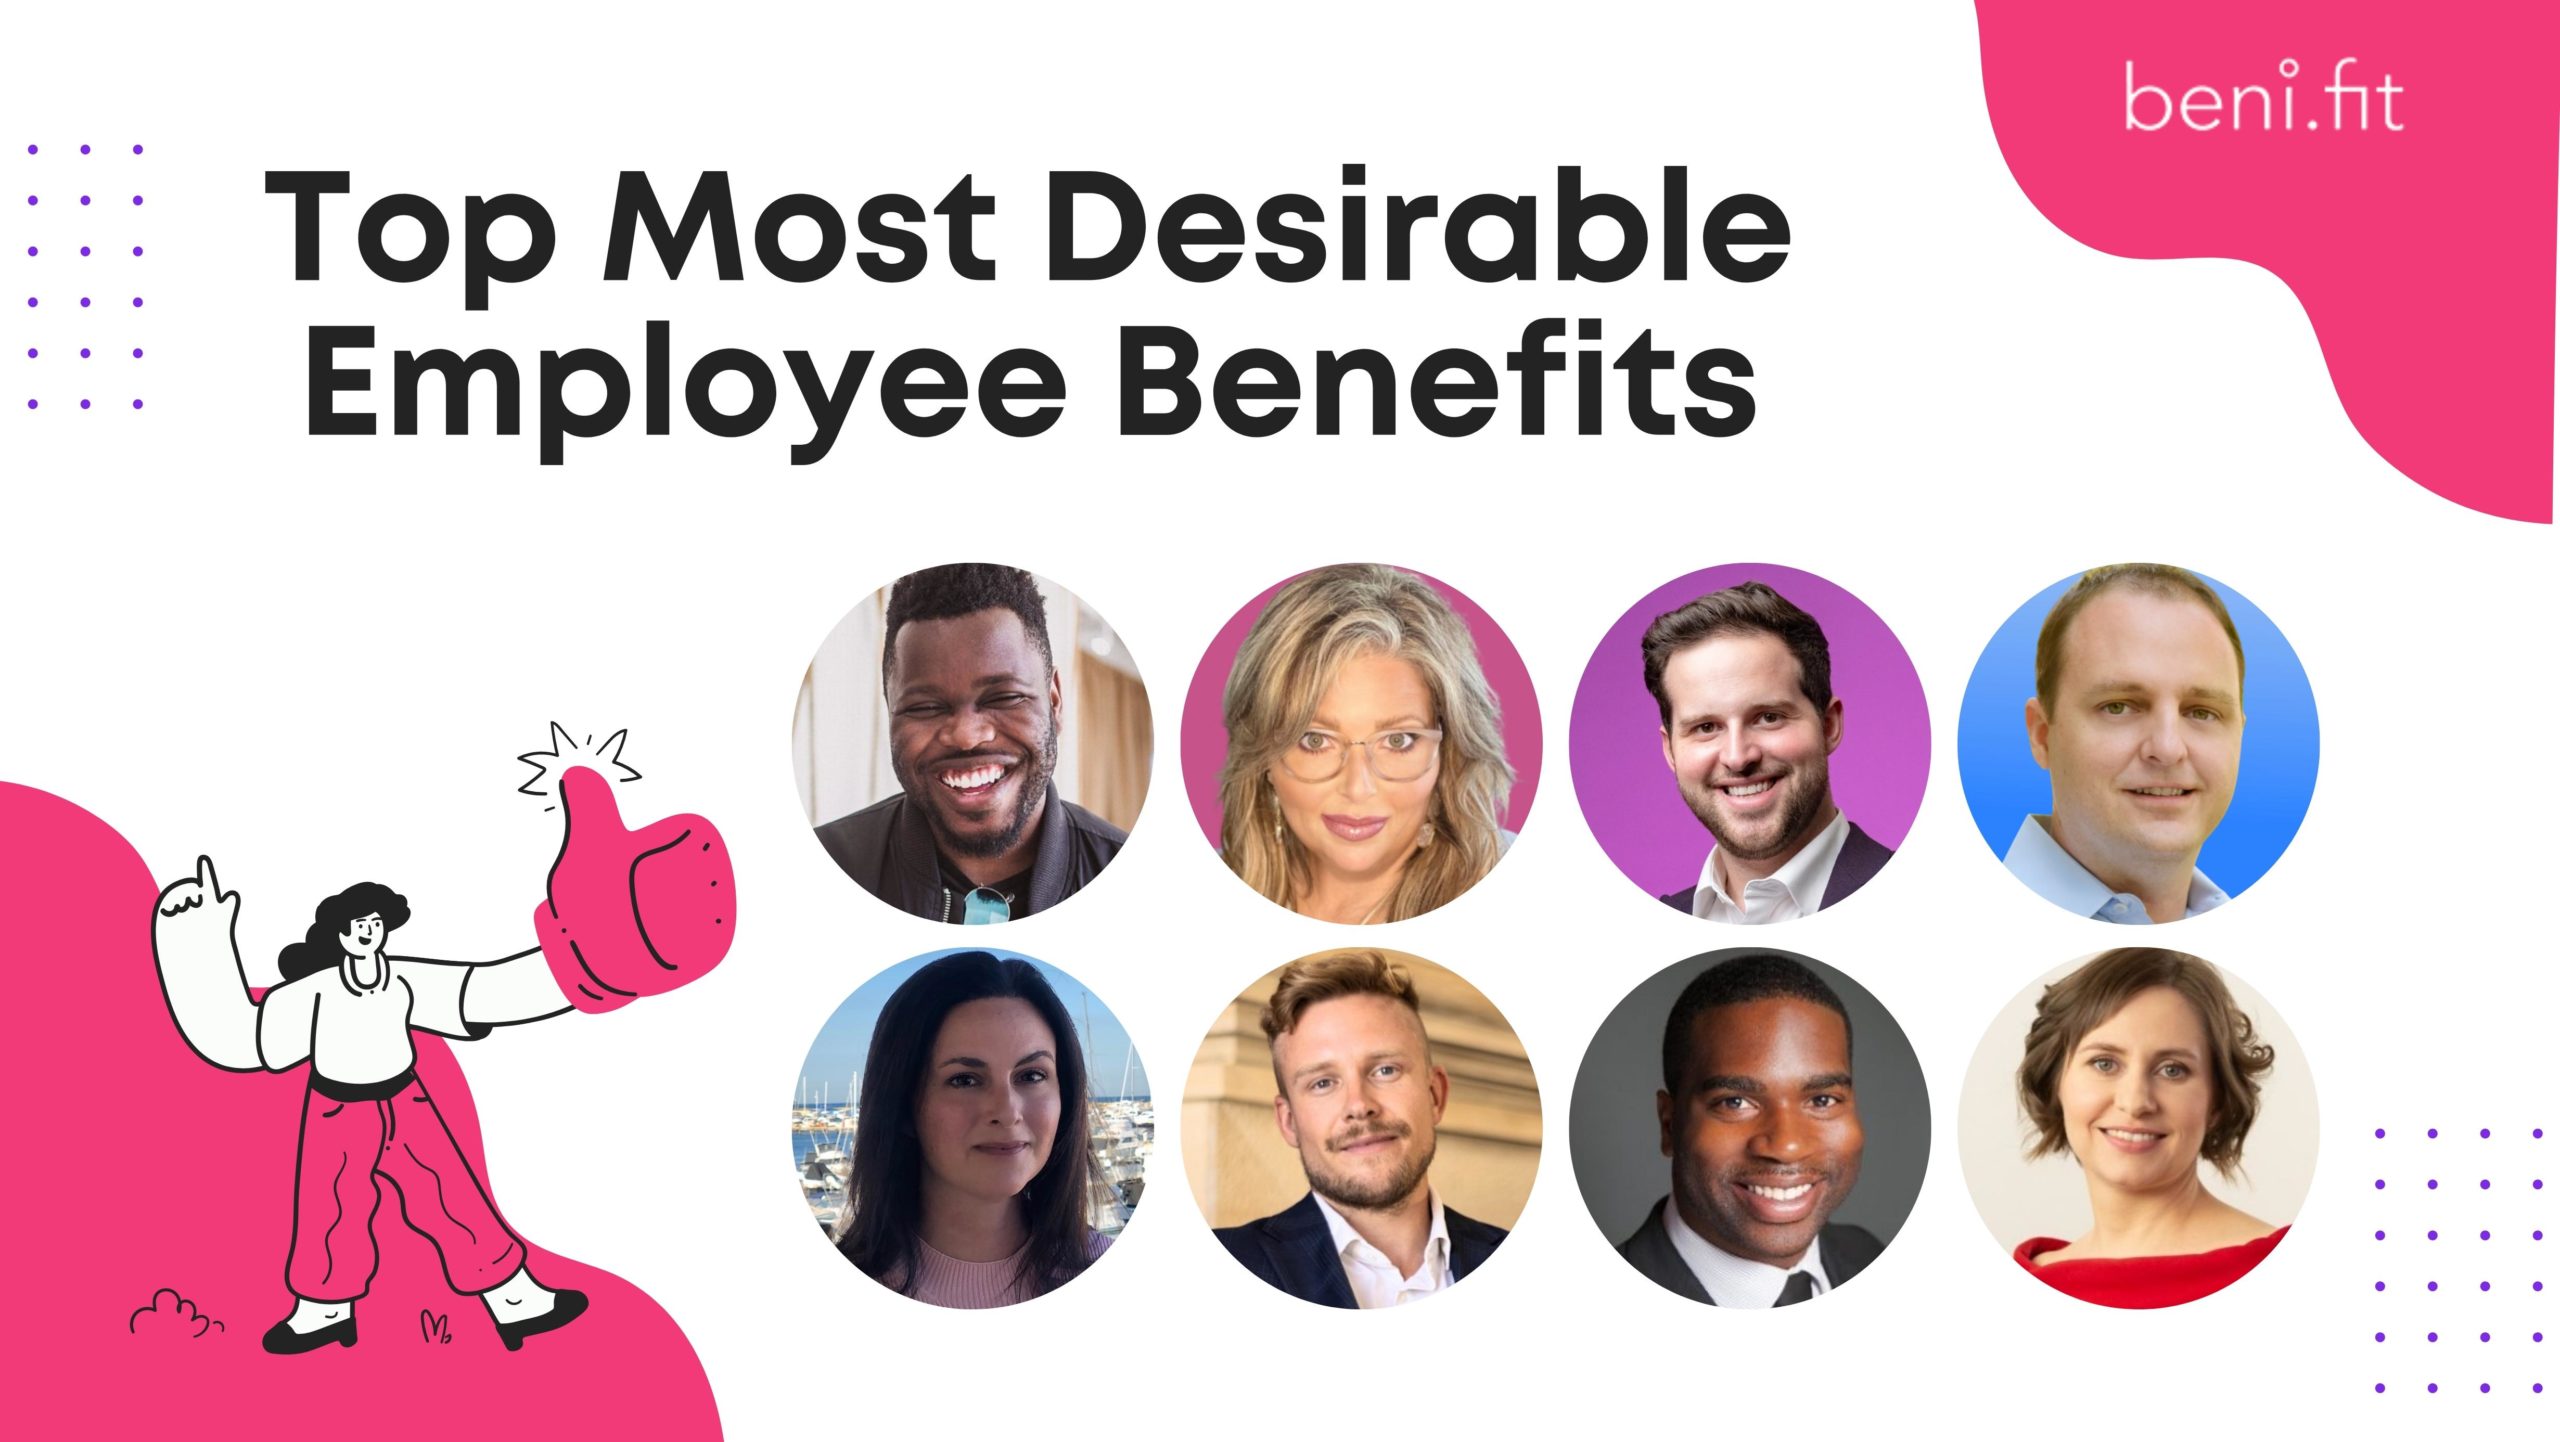 Top Most Desirable Employee Benefits